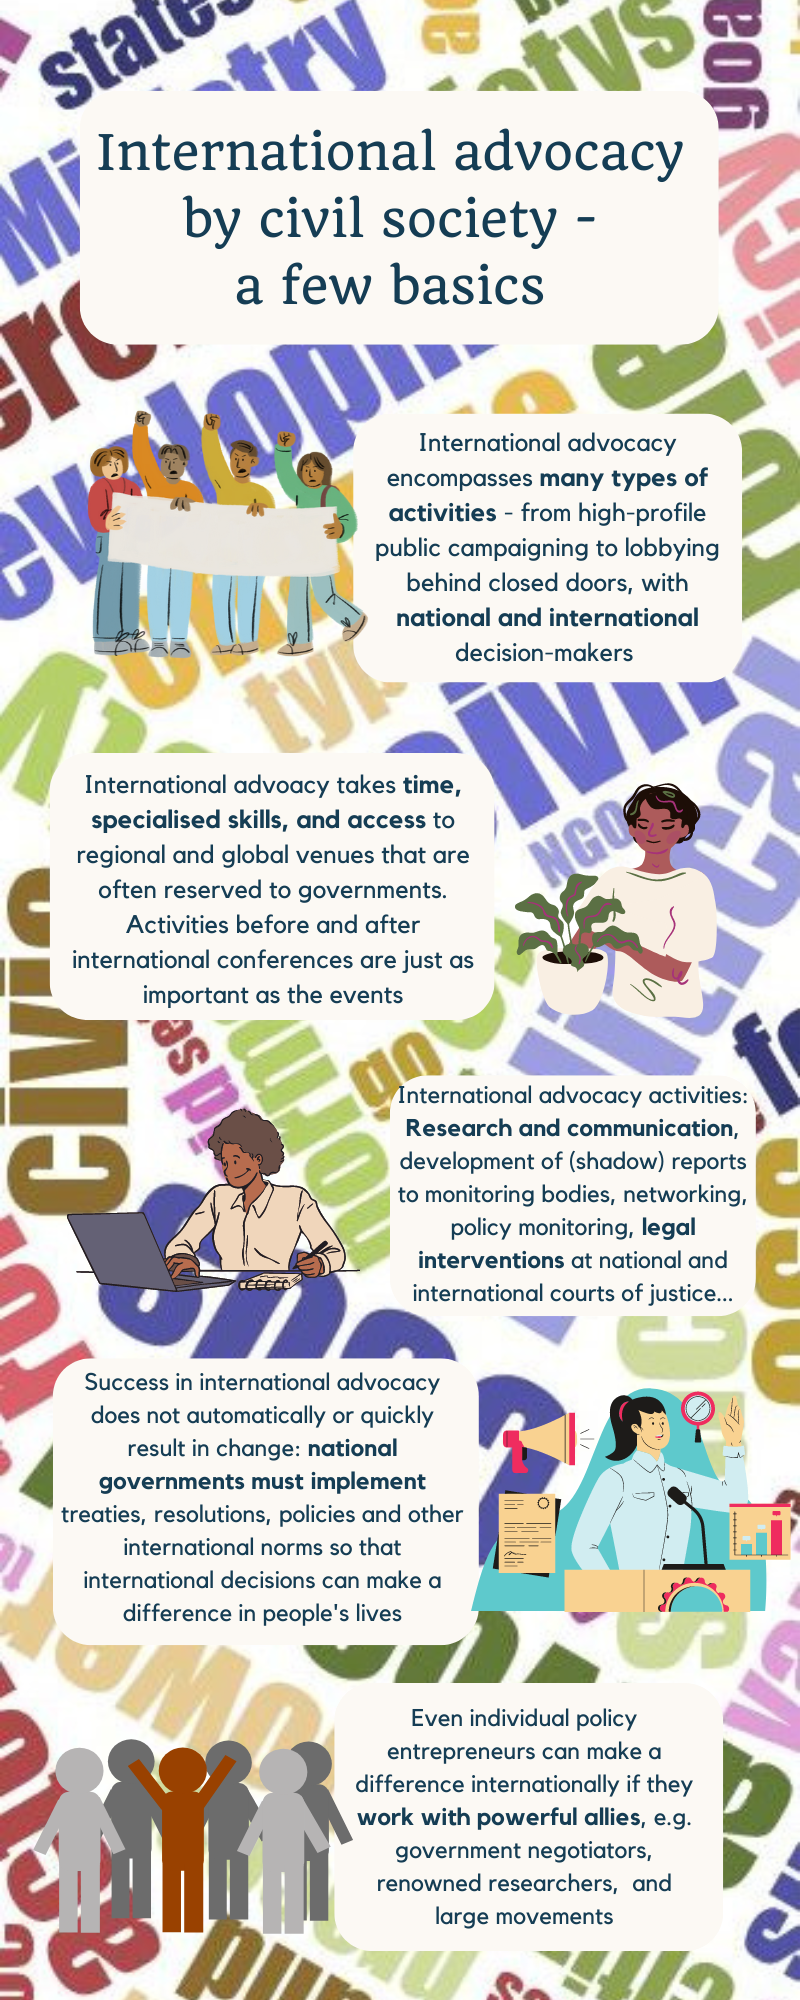 Infographic summarising key findings on international advocacy